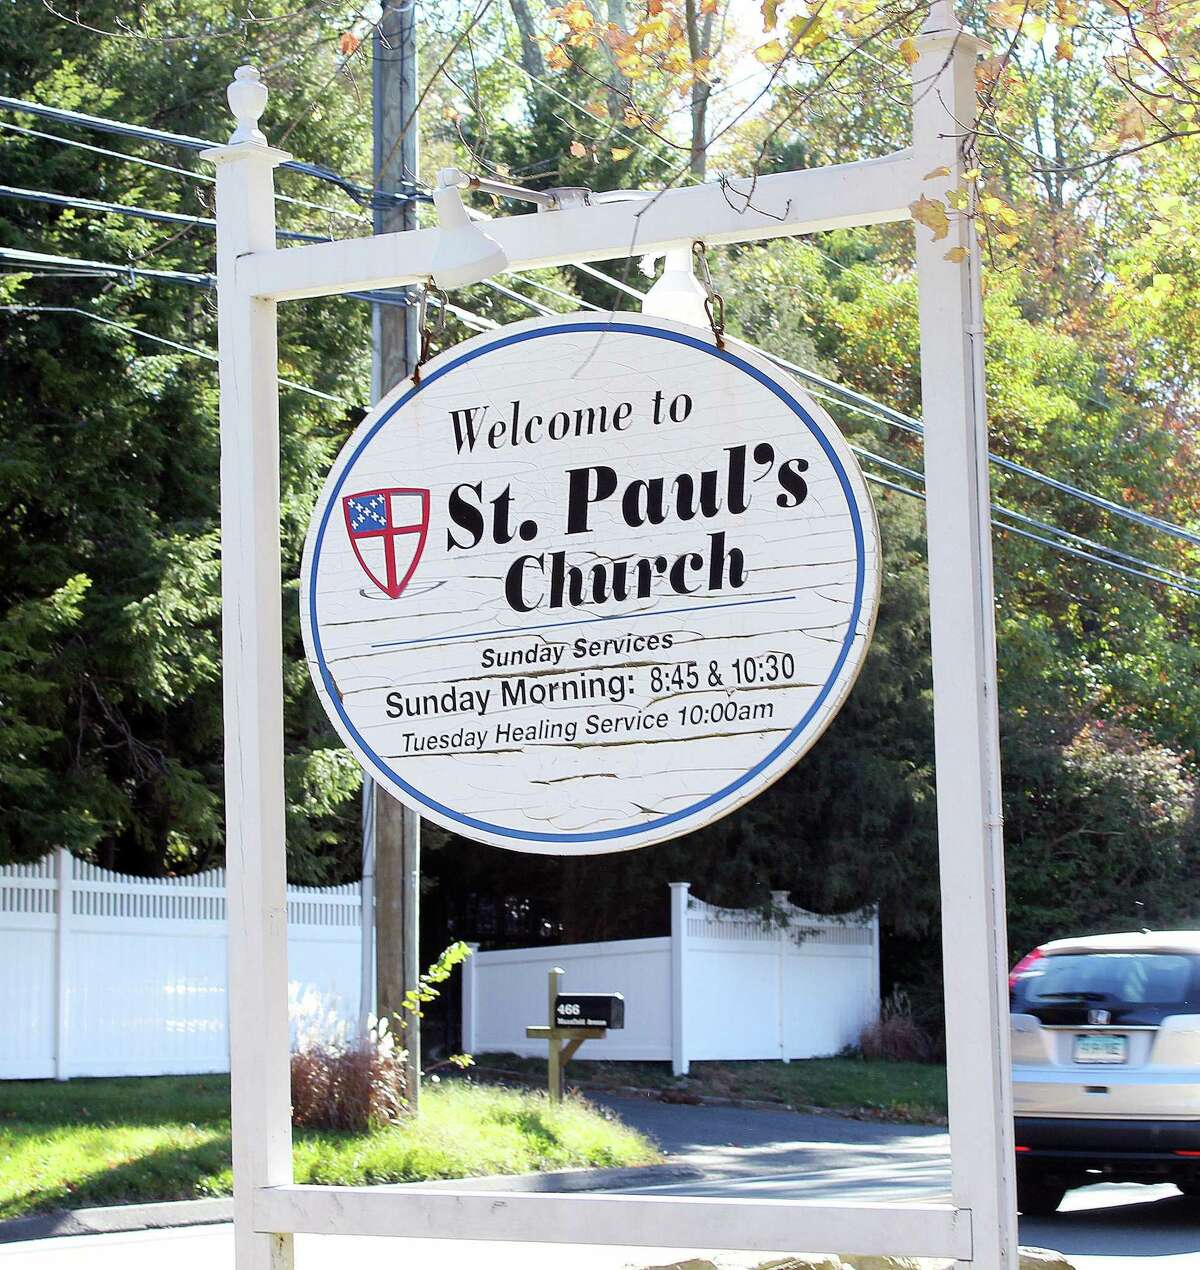 St. Paul's, an Episcopal Church in Darien, CT got a new reverend on Nov. 2, 2016.